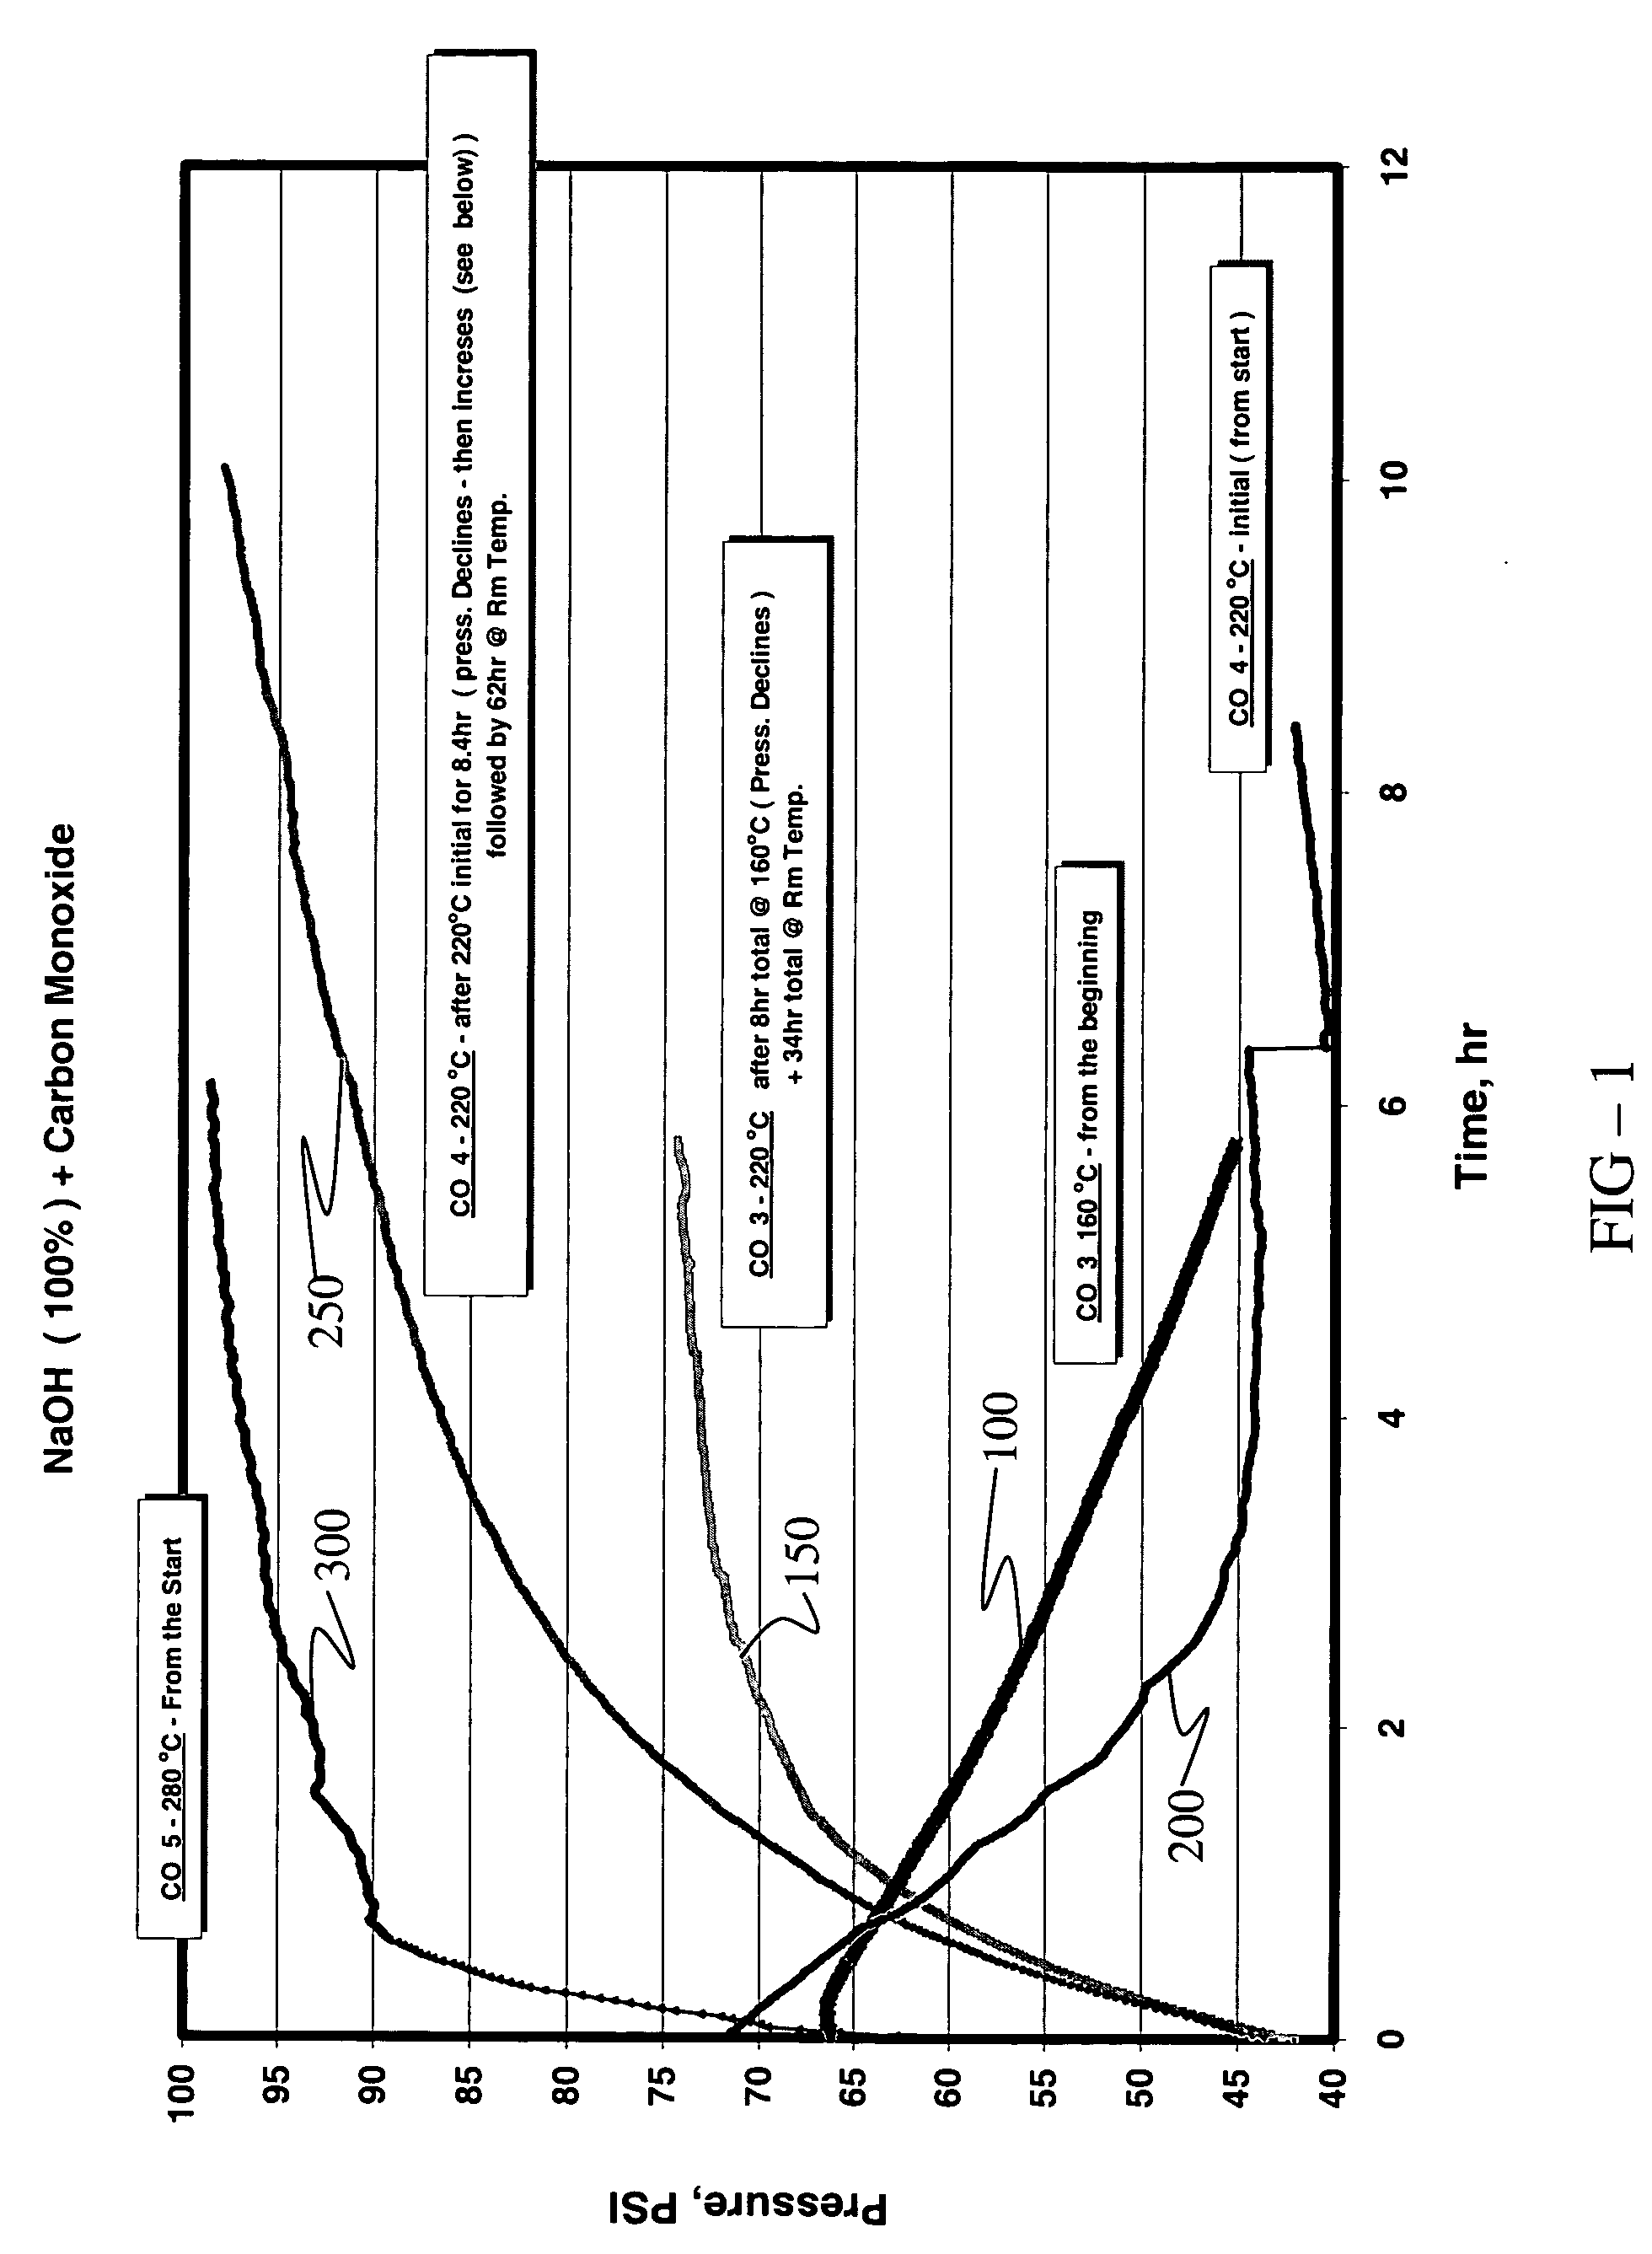 Production of hydrogen via a base-faciliated reaction of carbon monoxide